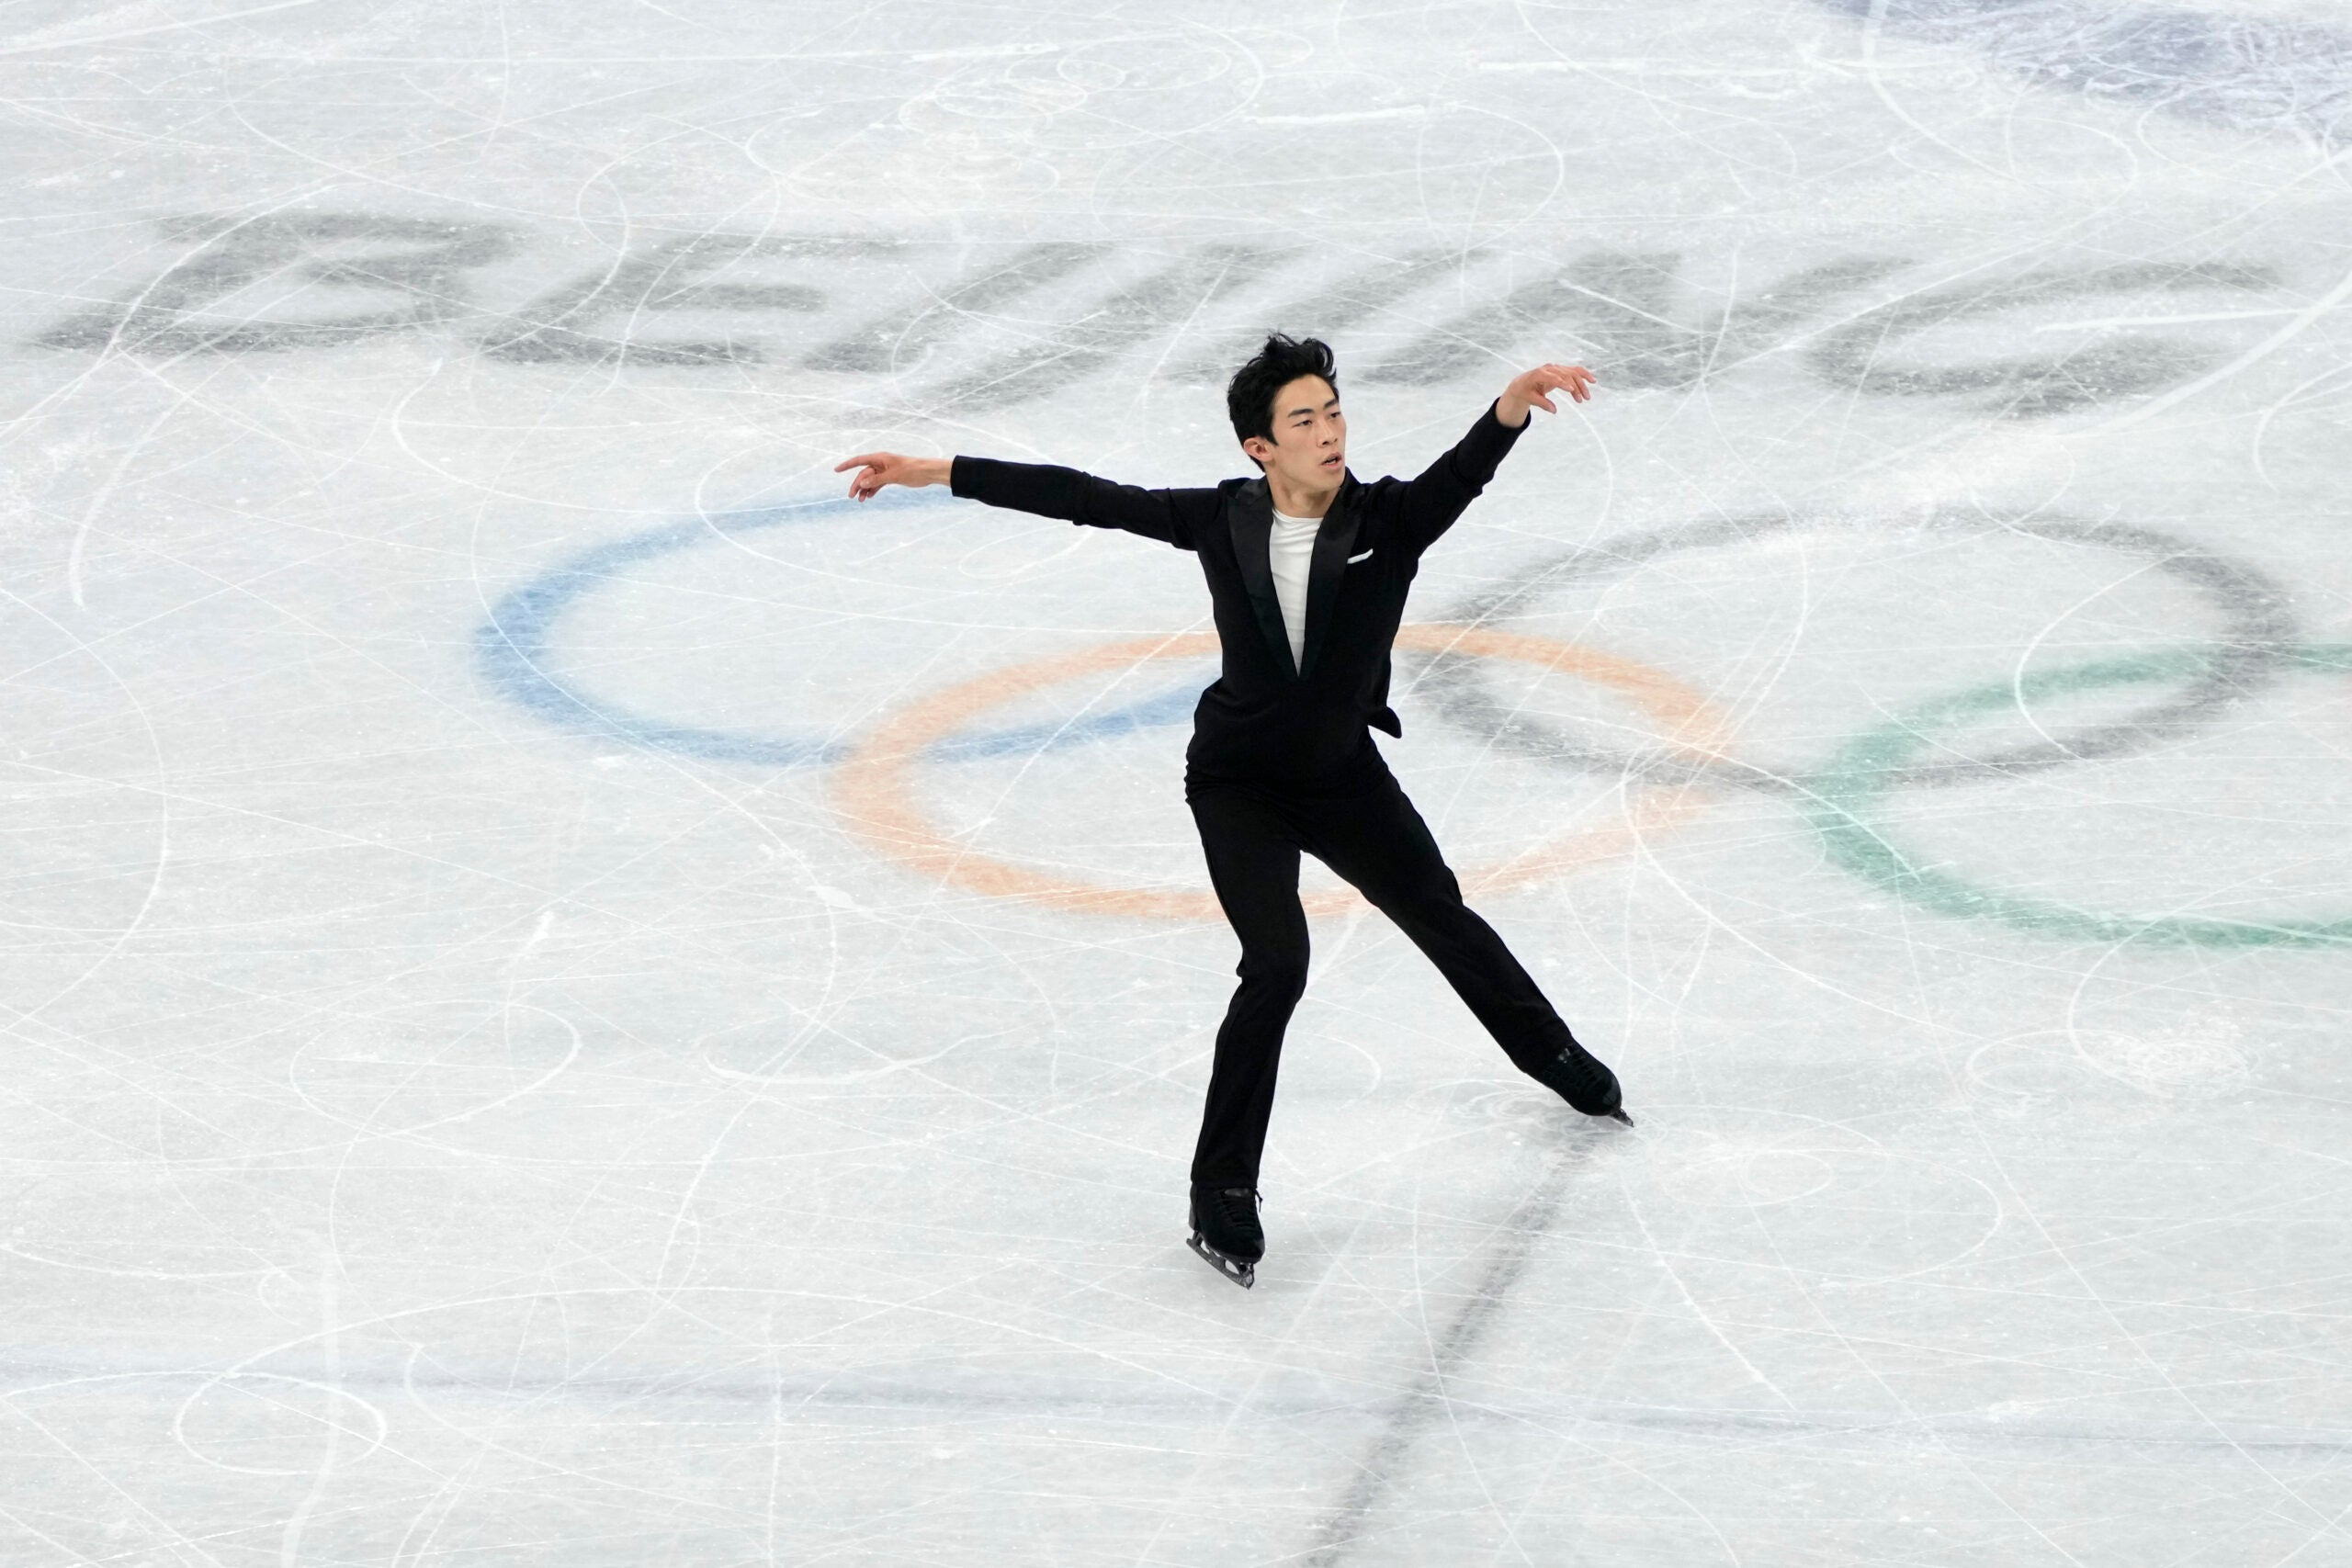 Vincent Zhou nathan chen covid figure skating olympics